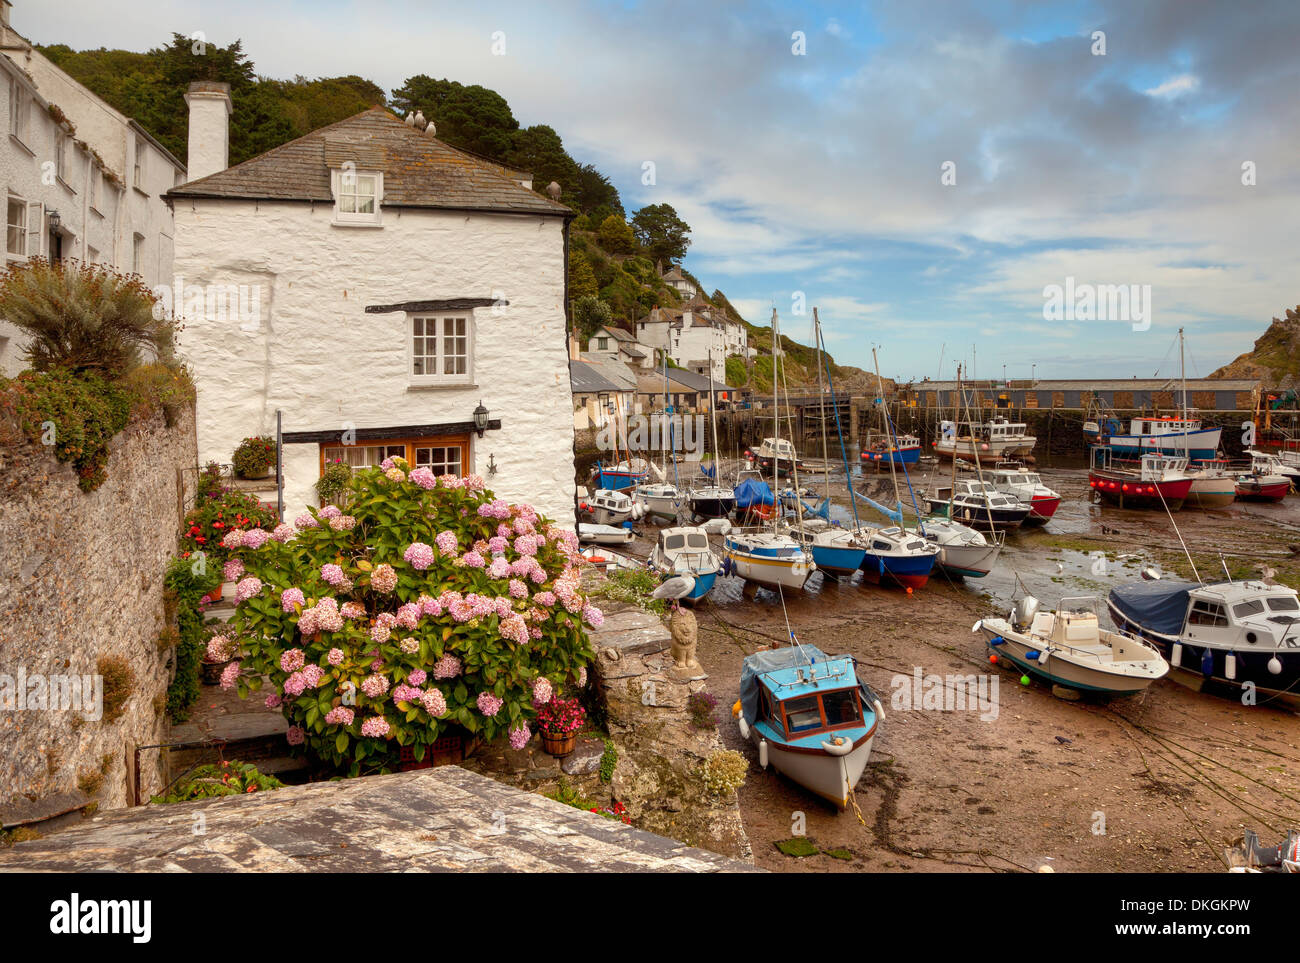 The historic village of Polperro, Cornwall, England. Stock Photo